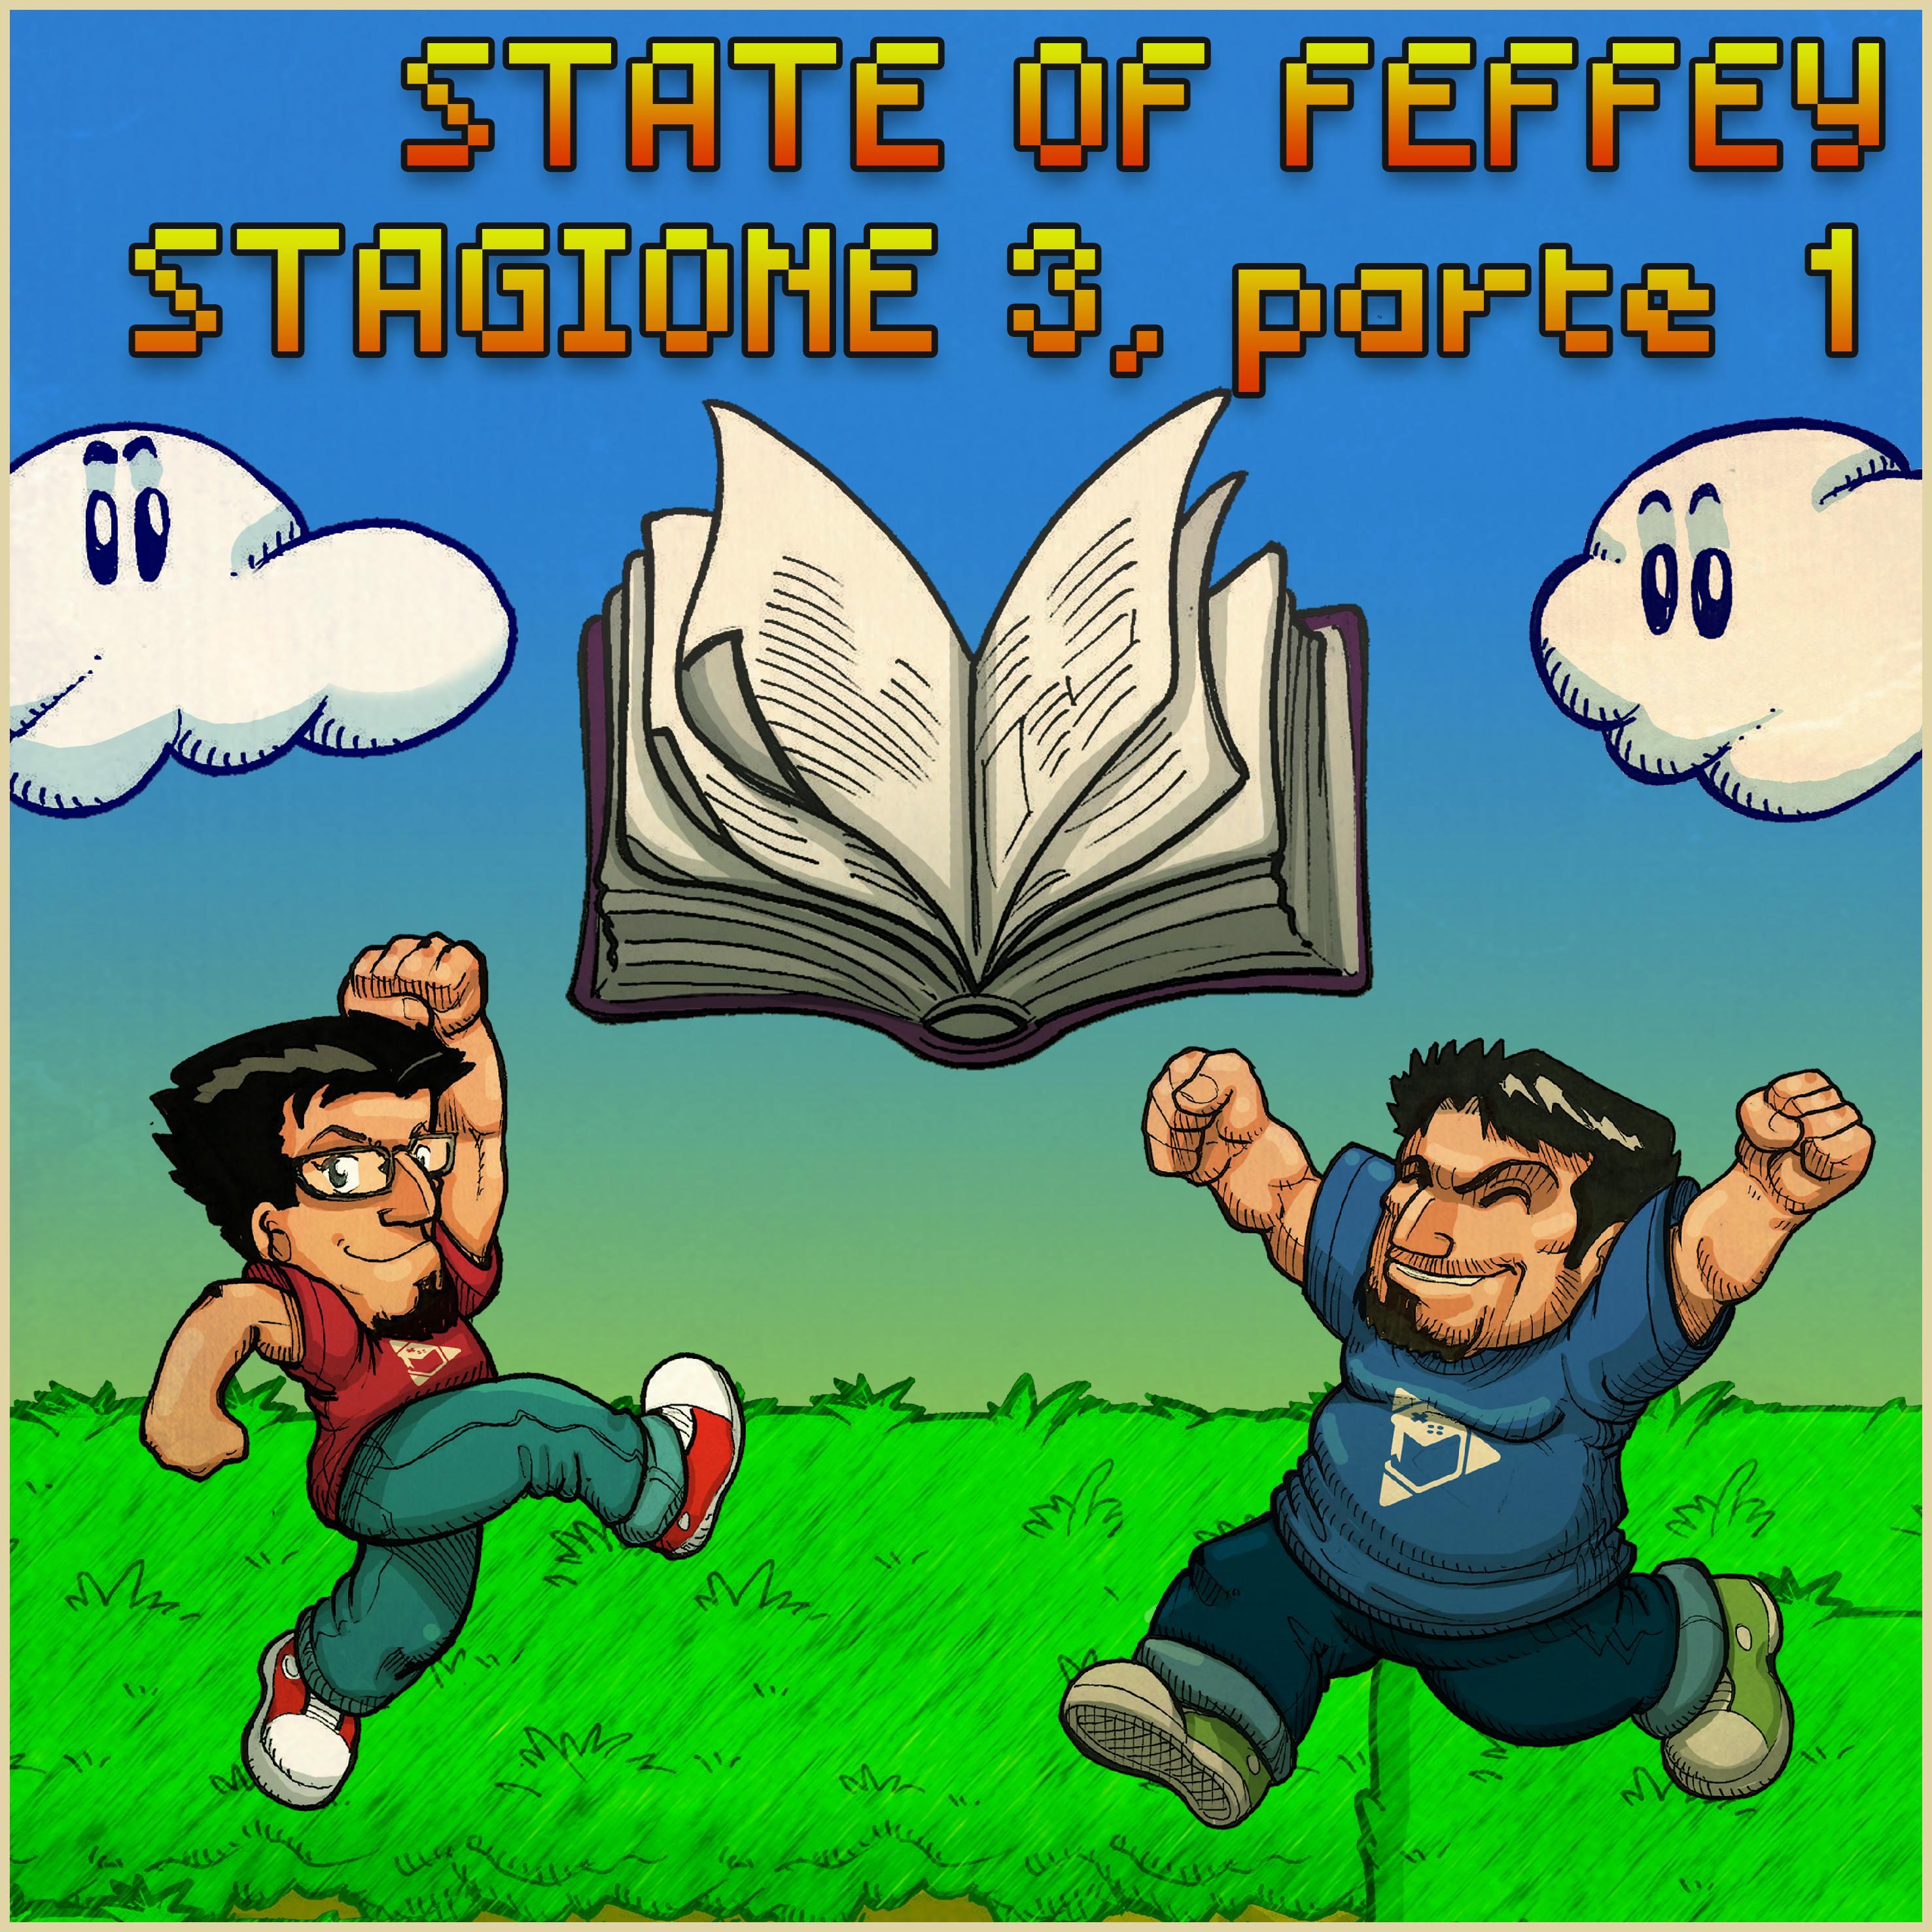 State of Feffey: Stagione 3, parte 1